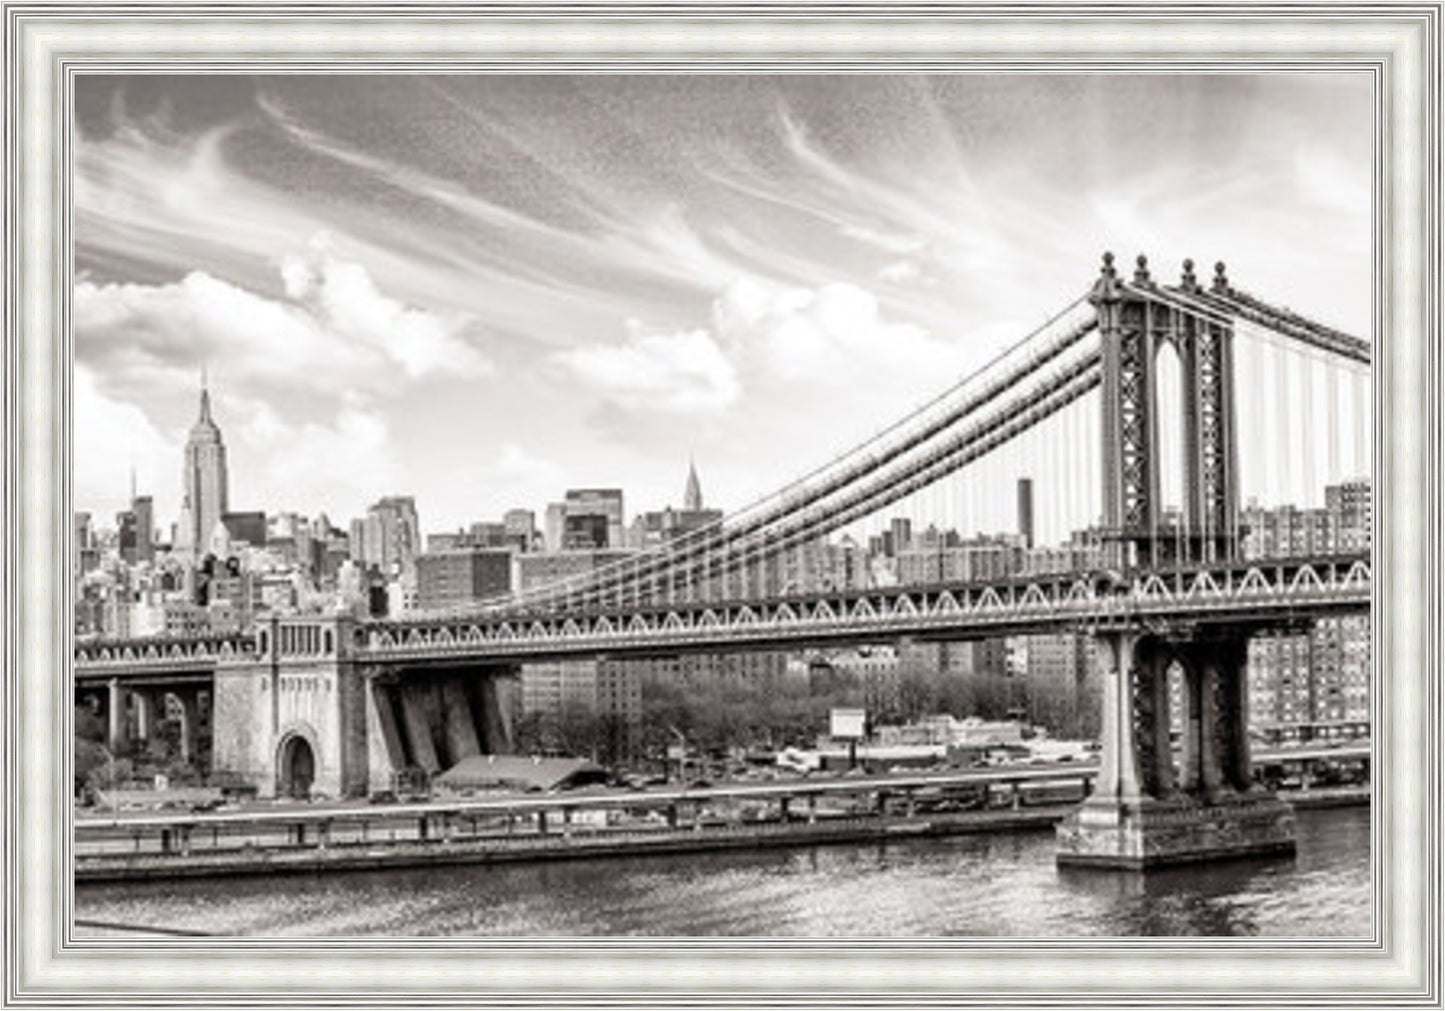 Bridge to the Big Apple, New York - Slim Frame